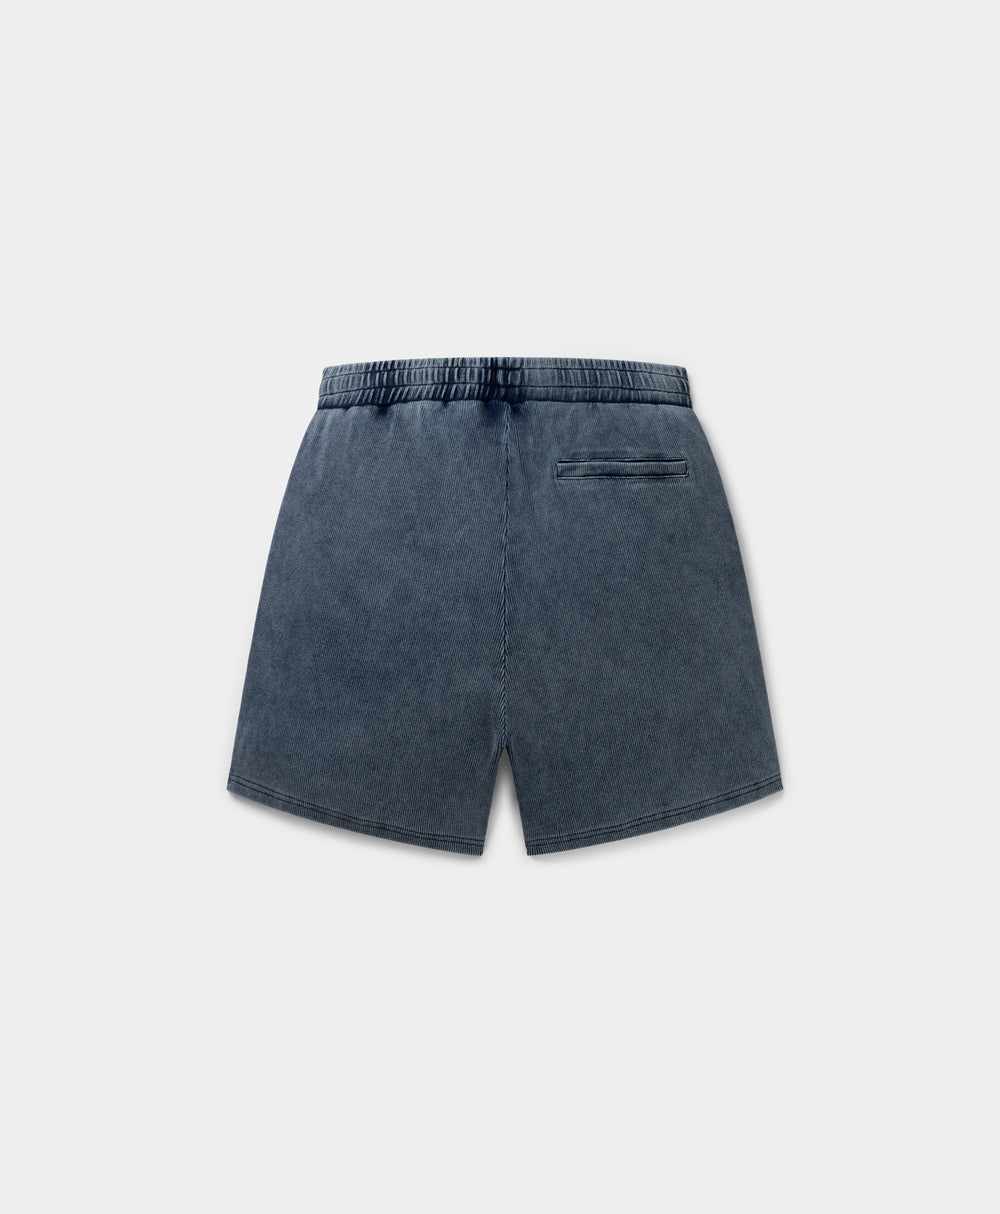 DP - Blue Abasi Shorts - Packshot - Rear